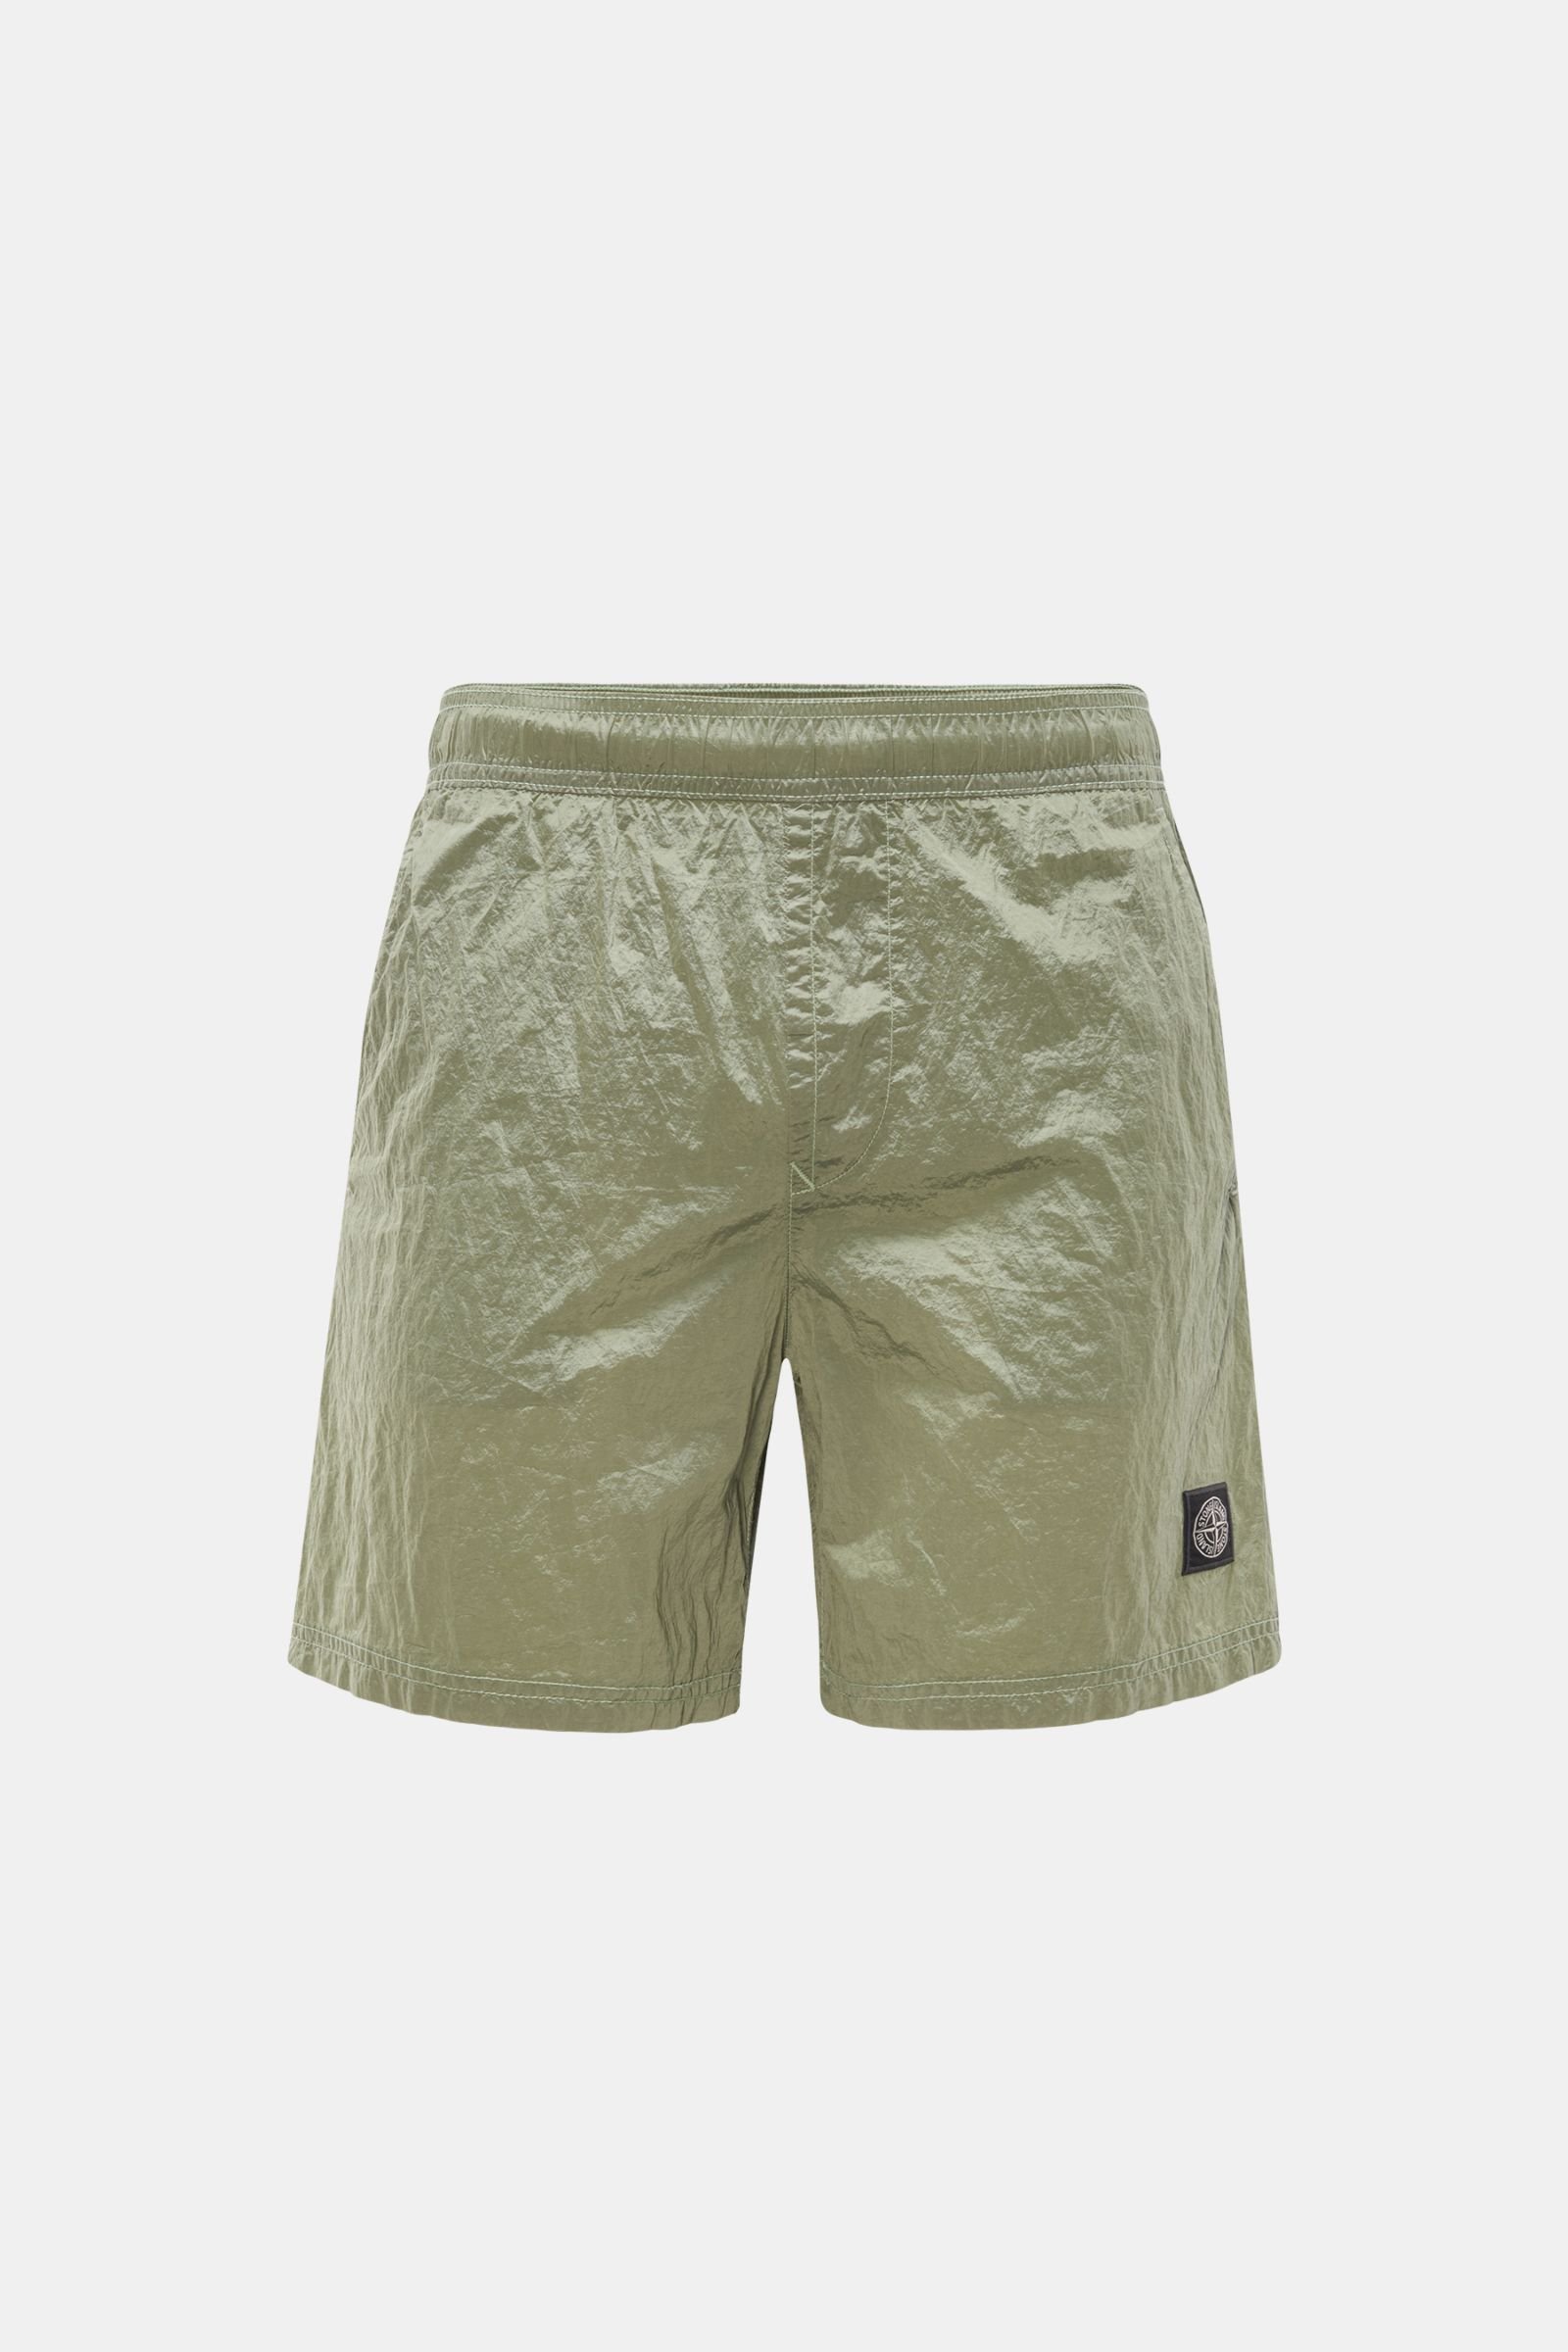 Swim shorts grey-green